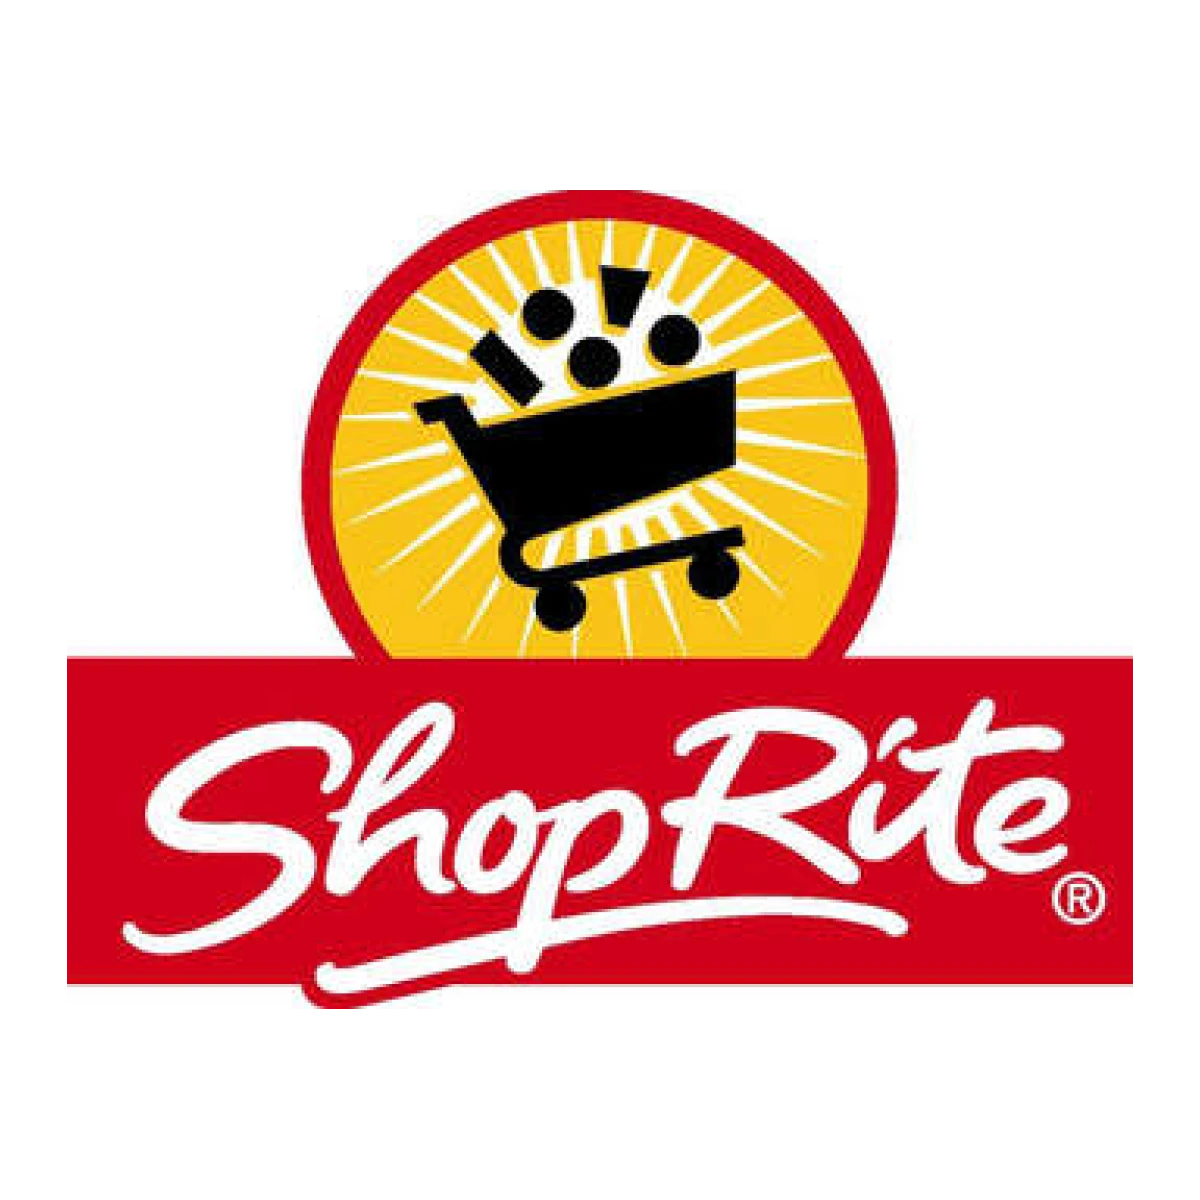 ShopRite grocery store horizontal logo